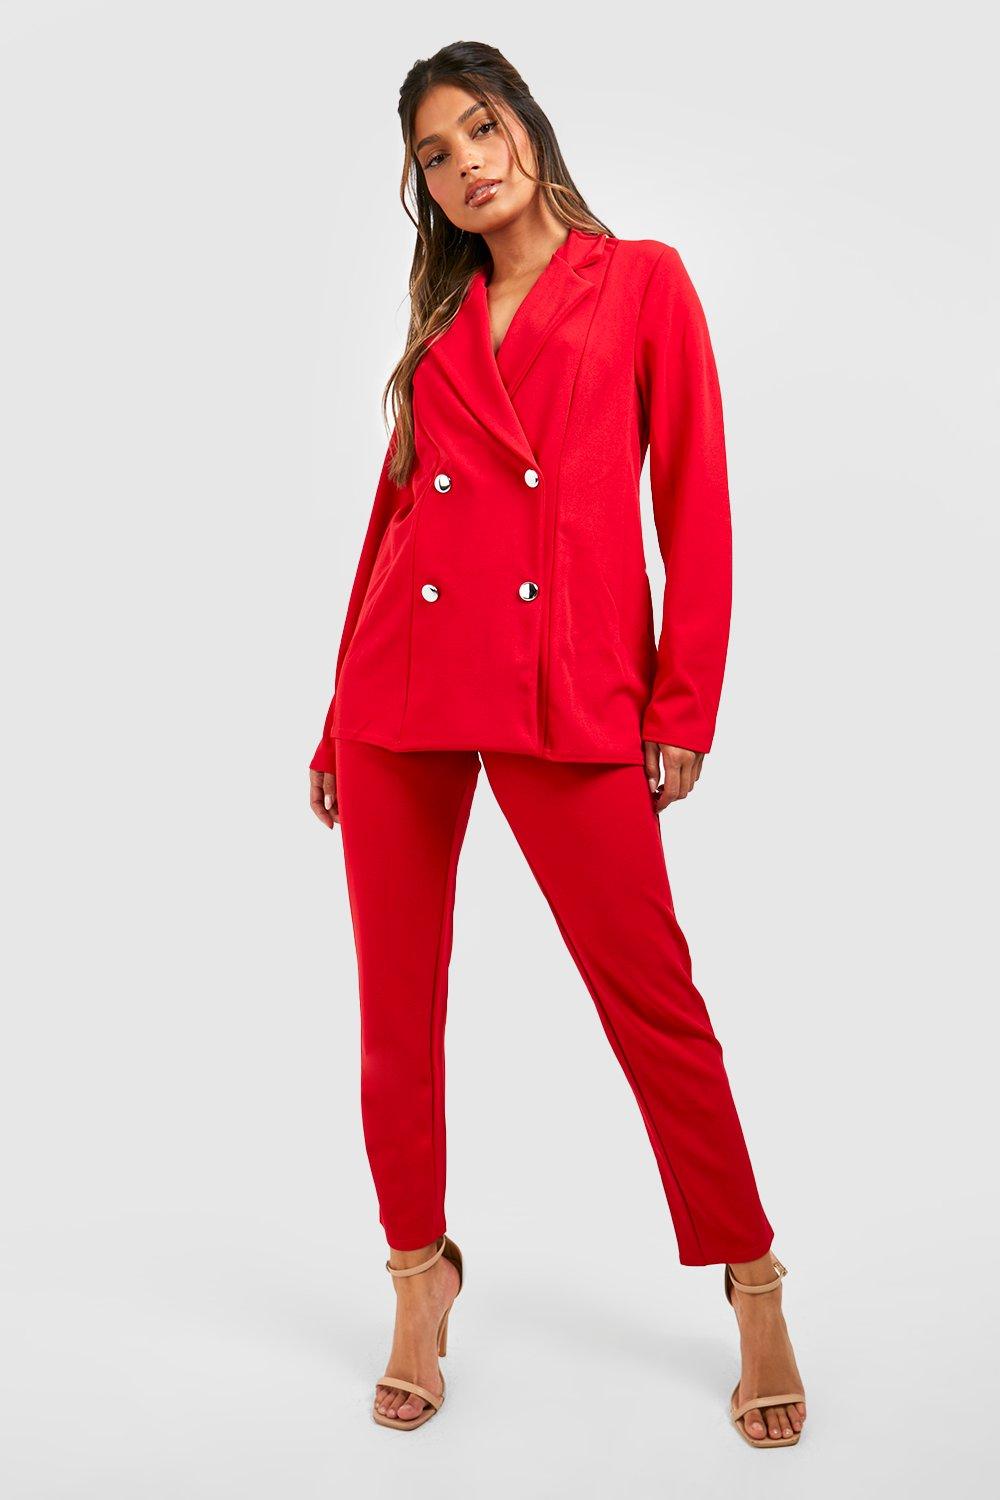 Women's Solid Two Piece Suit Set Business Office Long Sleeve Suit Jacket  And Trouser - Walmart.com